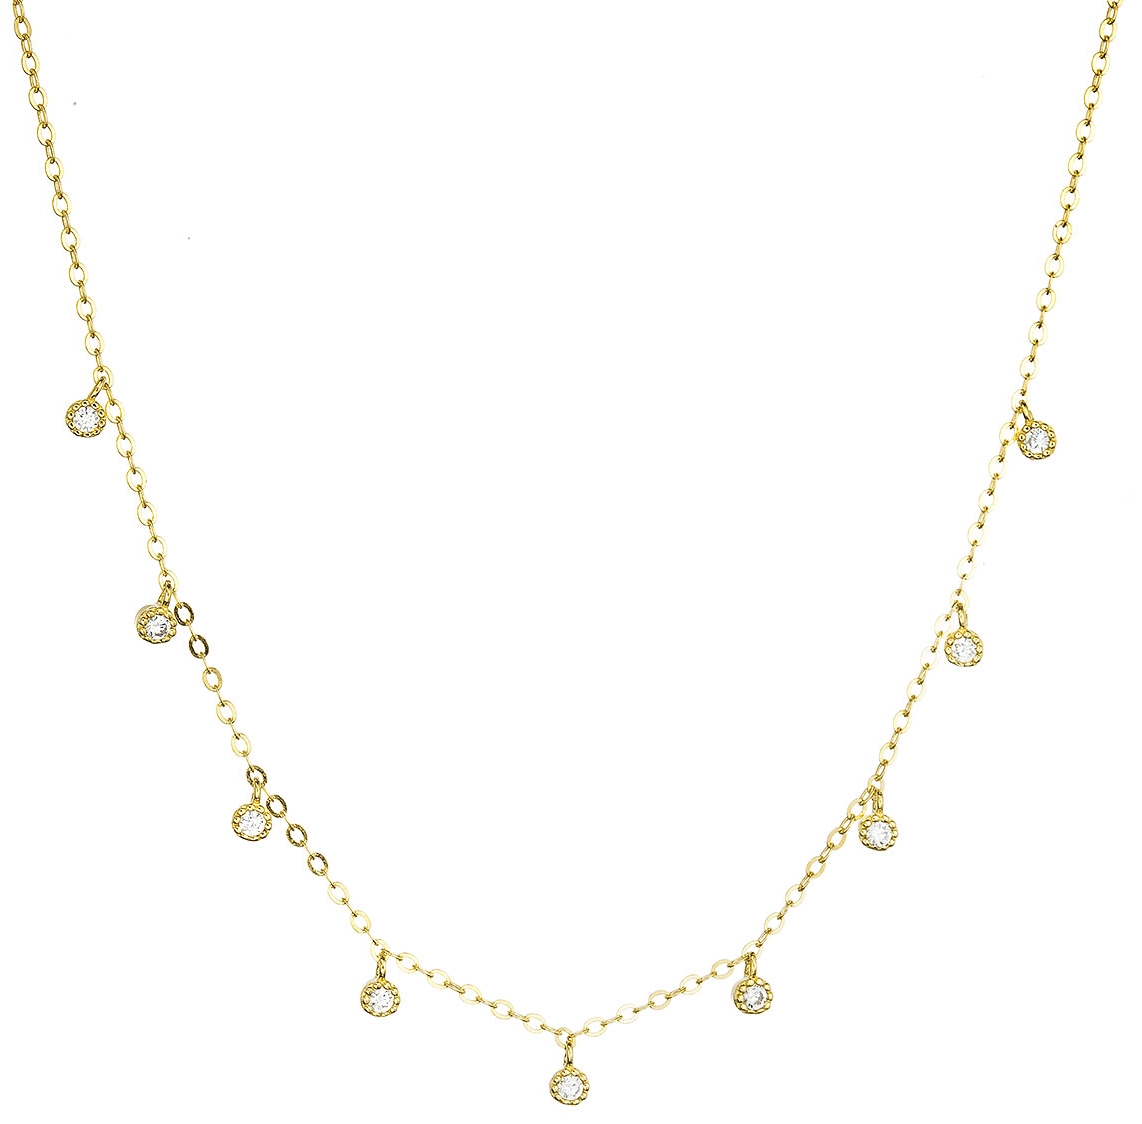 Pozlátený strieborný náhrdelník s 9 malými okrúhlymi zirkonmi 12056.1. crystal Au plating